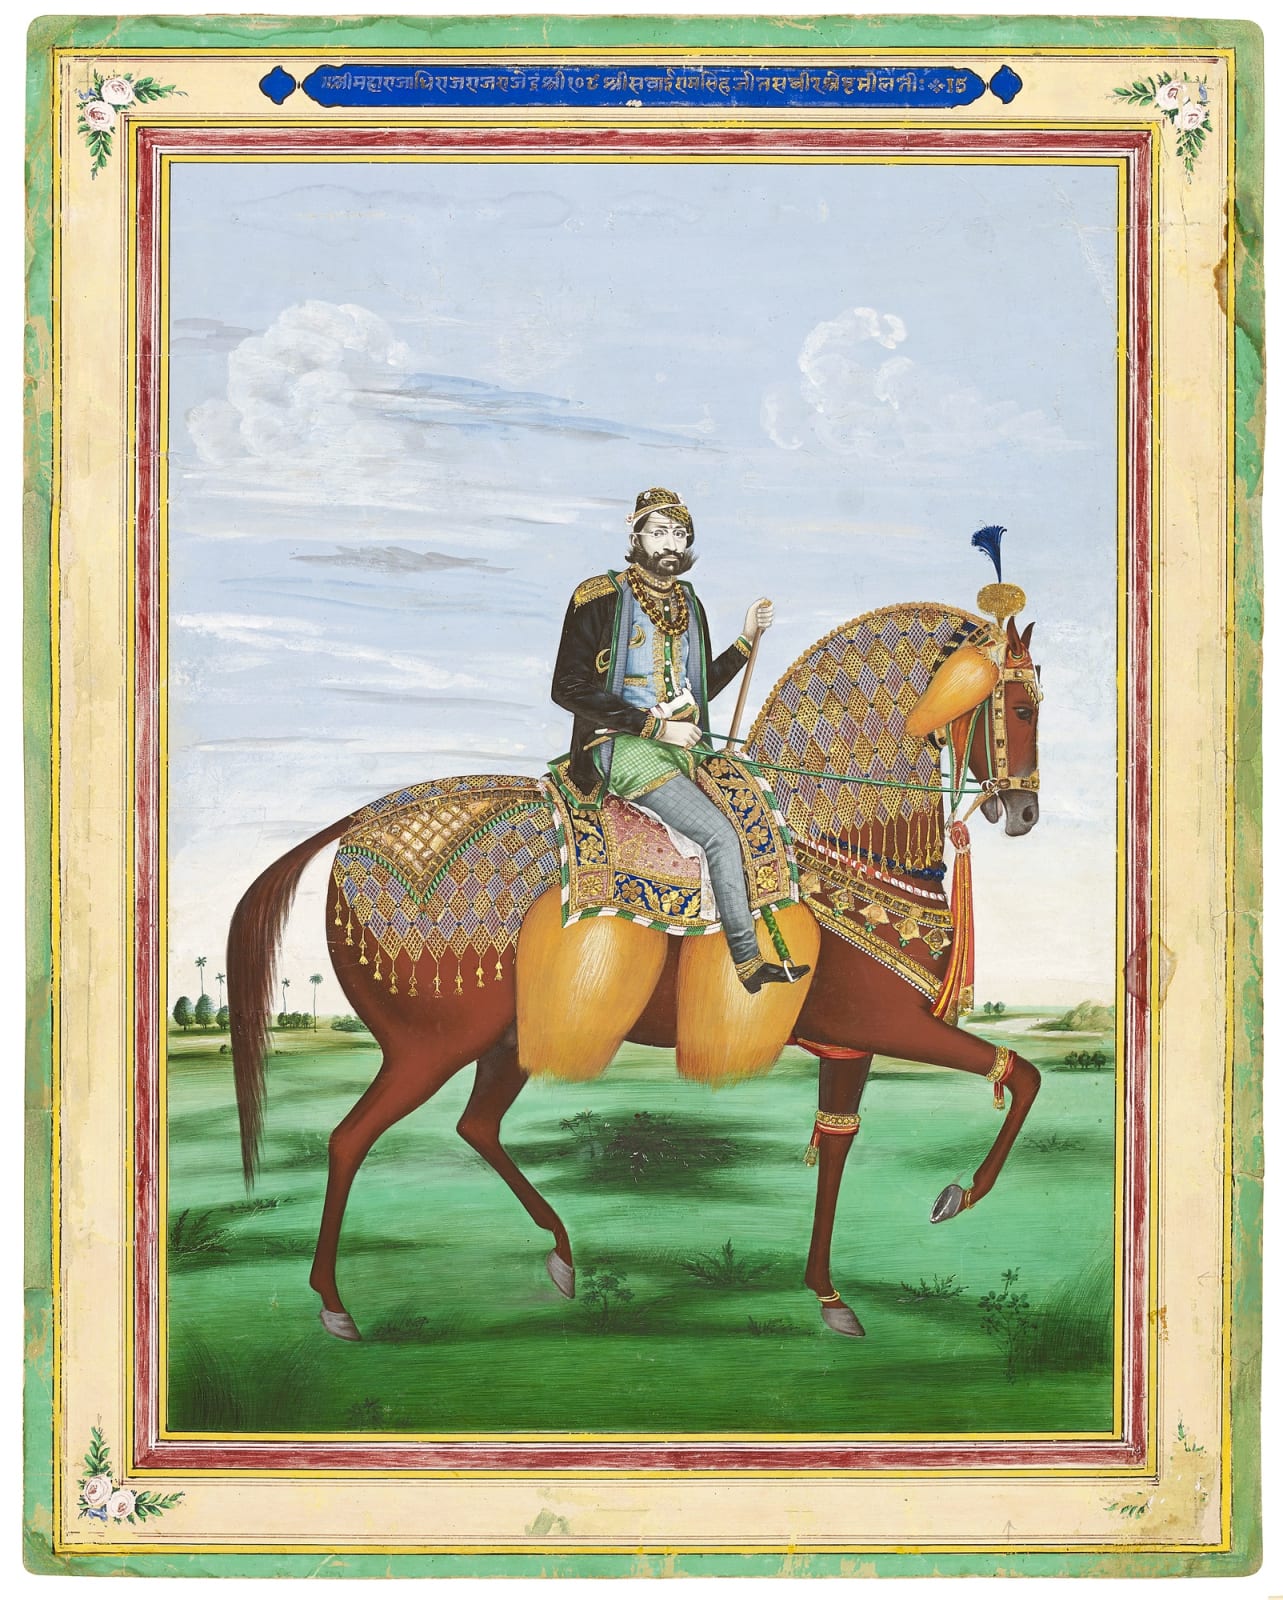 Equestrian Portrait of Maharaja Sawai Ram Singh II of Jaipur (1834-1880) in the Photographic Style, Jaipur, c. 1875